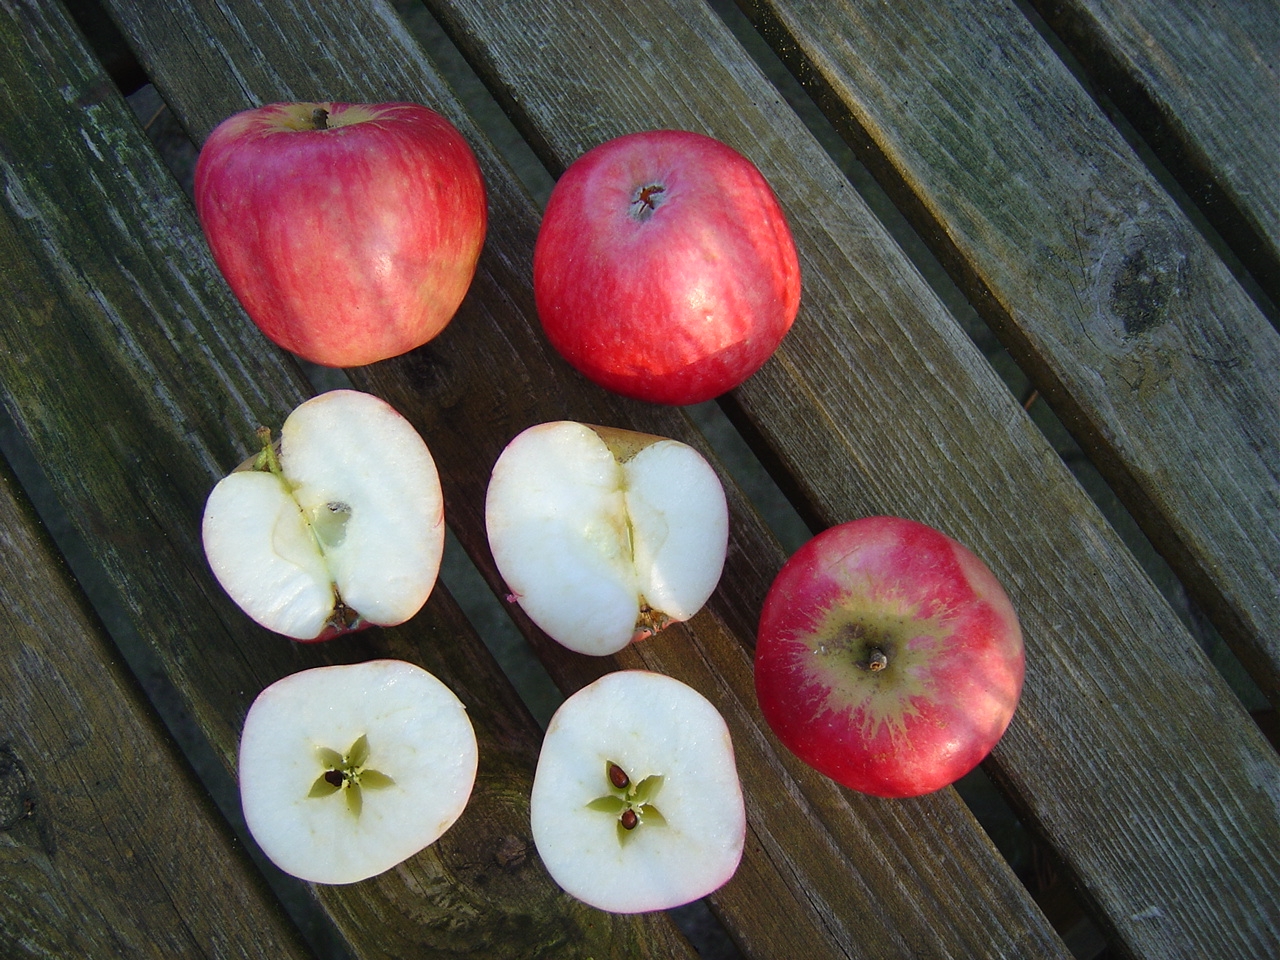 Sommerapfel-Apfelbaum (Augustapfel) Alte ´Roter Apfelsorten direkt www.alte-obstsorten-online.de Apfelsorten - Obstbaum-Shop! alte Obstbaumschule! - - aus der Ihr Klarapfel´ Obstsorten,